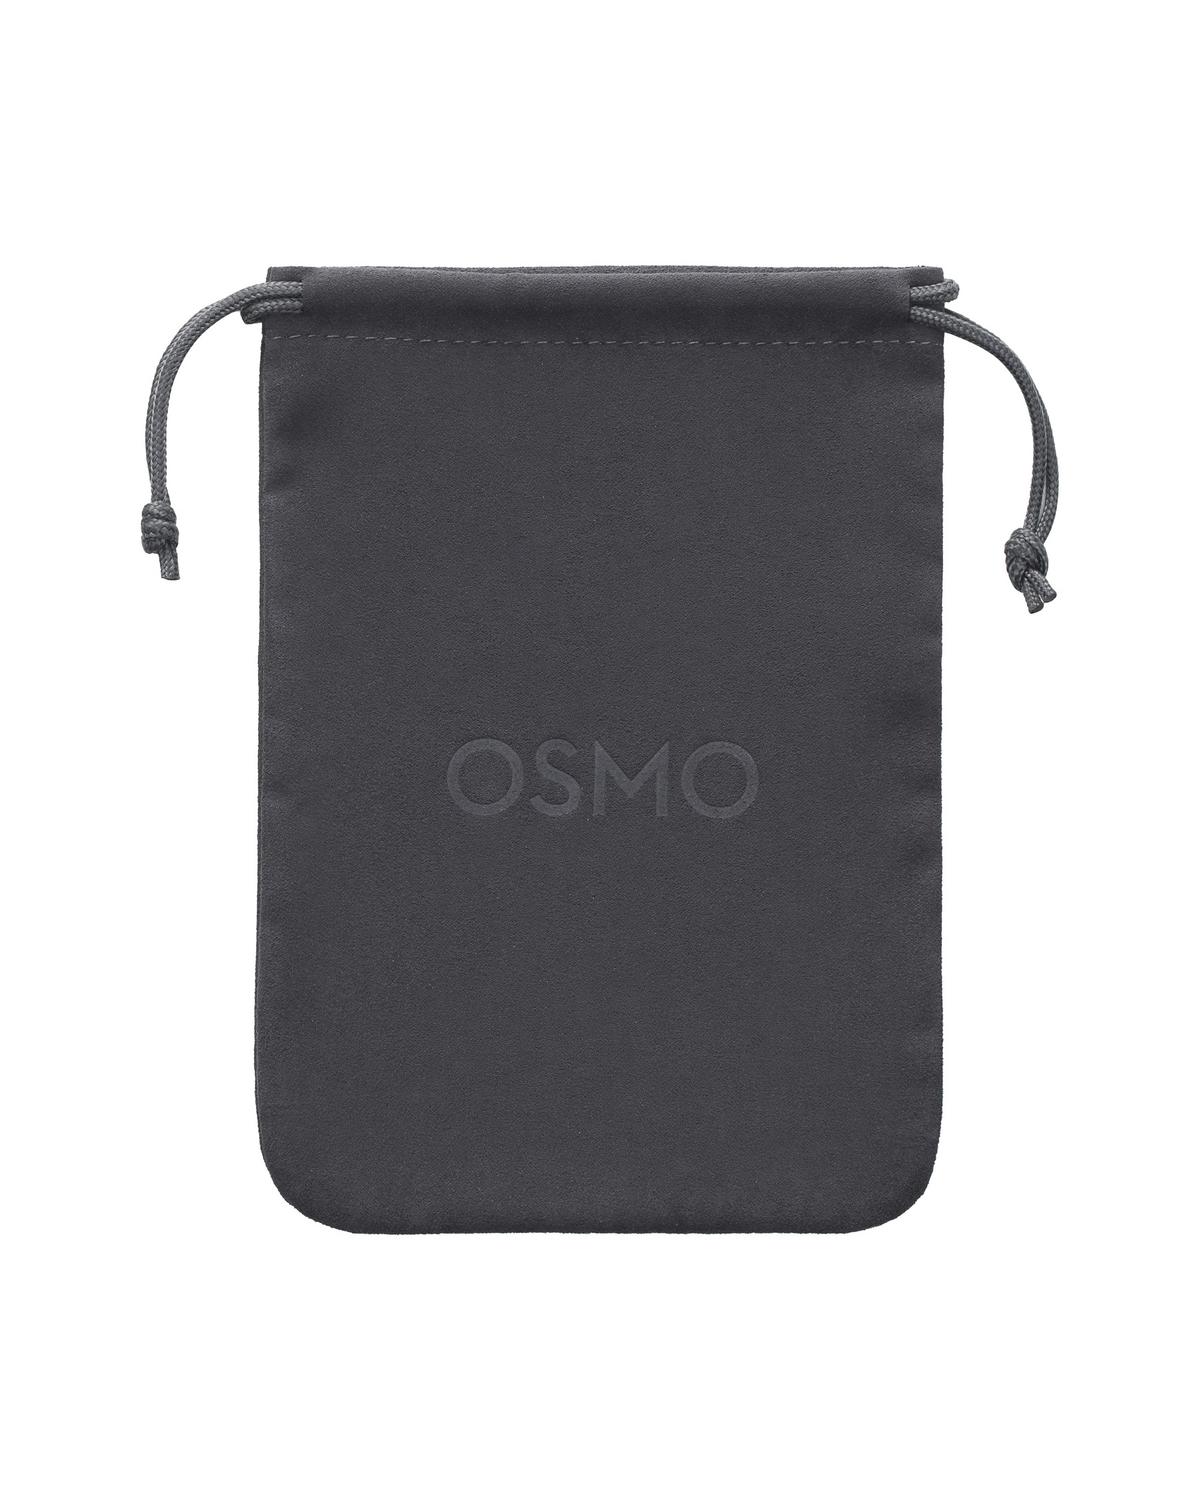 DJI Osmo Mobile 6 Smartphone Stabiliser -  Black